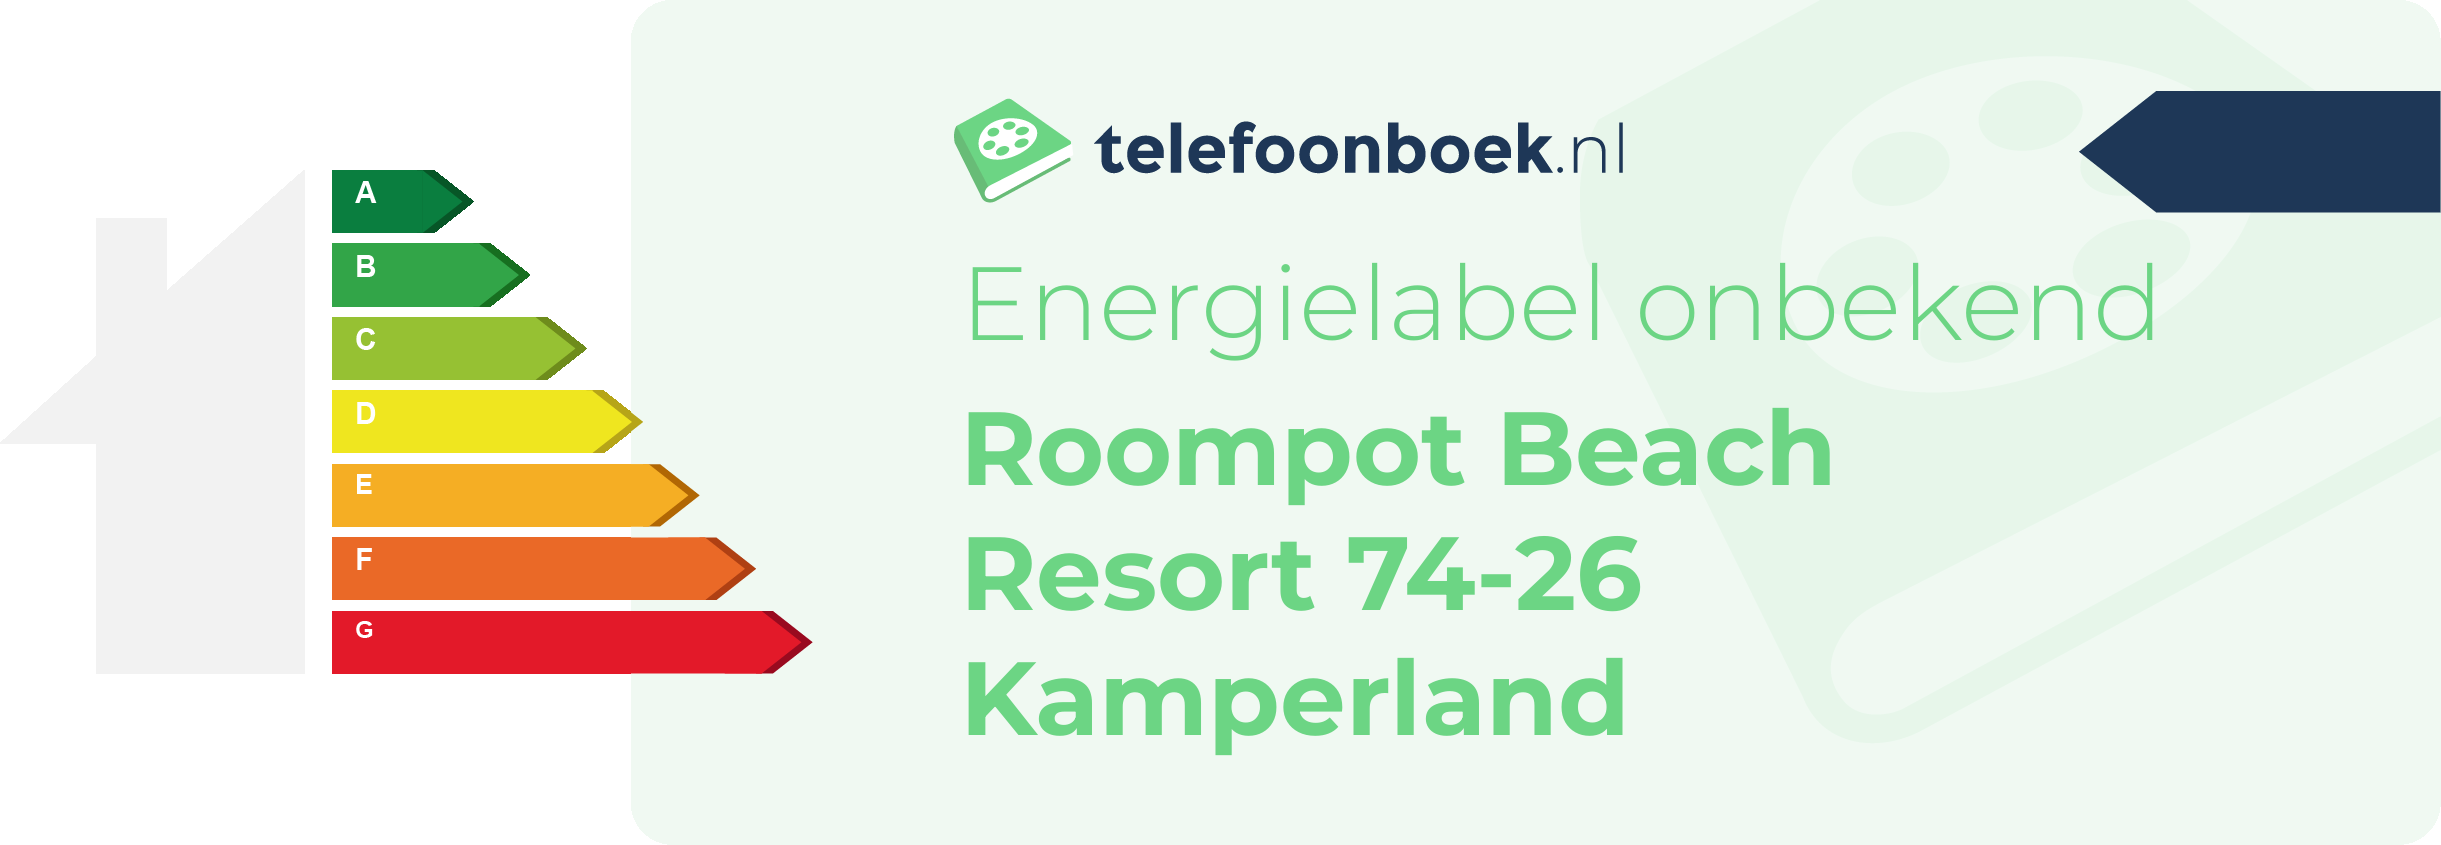 Energielabel Roompot Beach Resort 74-26 Kamperland